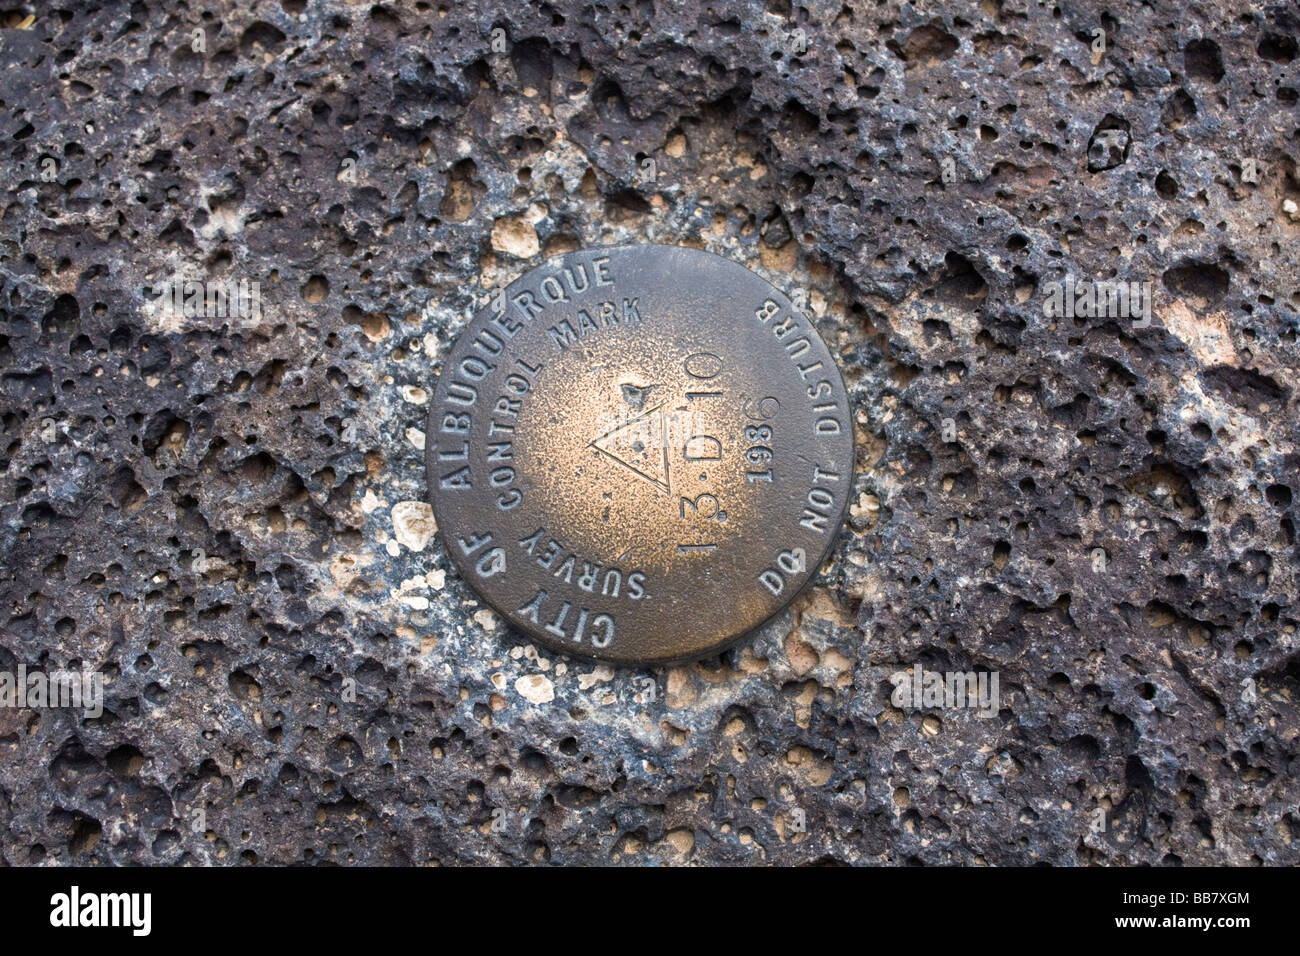 Benchmark found in volcanic rock Albuquerque New Mexico Stock Photo